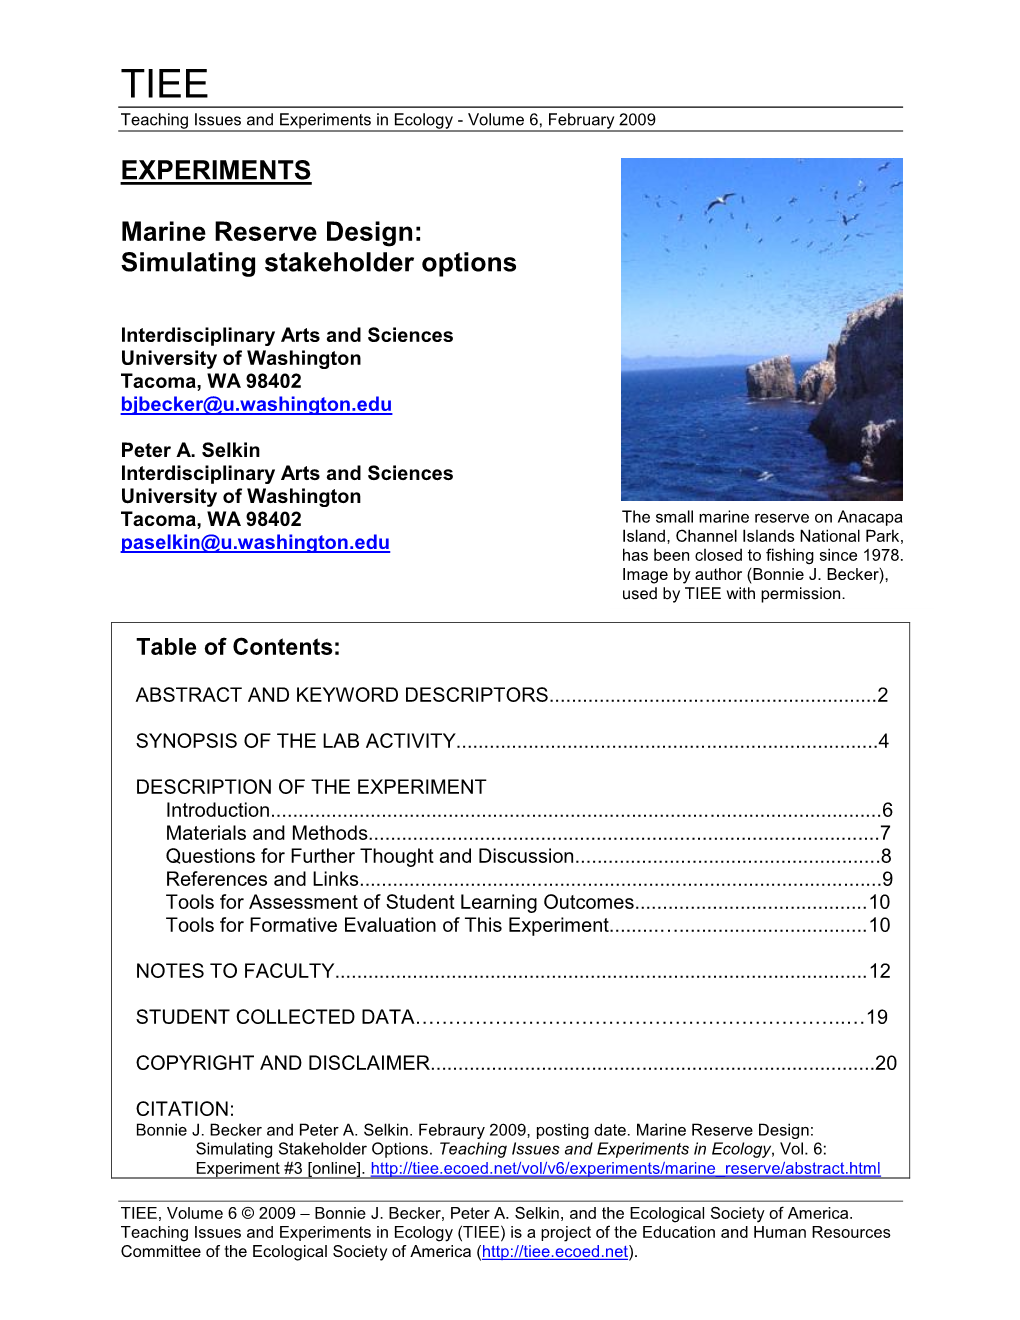 EXPERIMENTS Marine Reserve Design